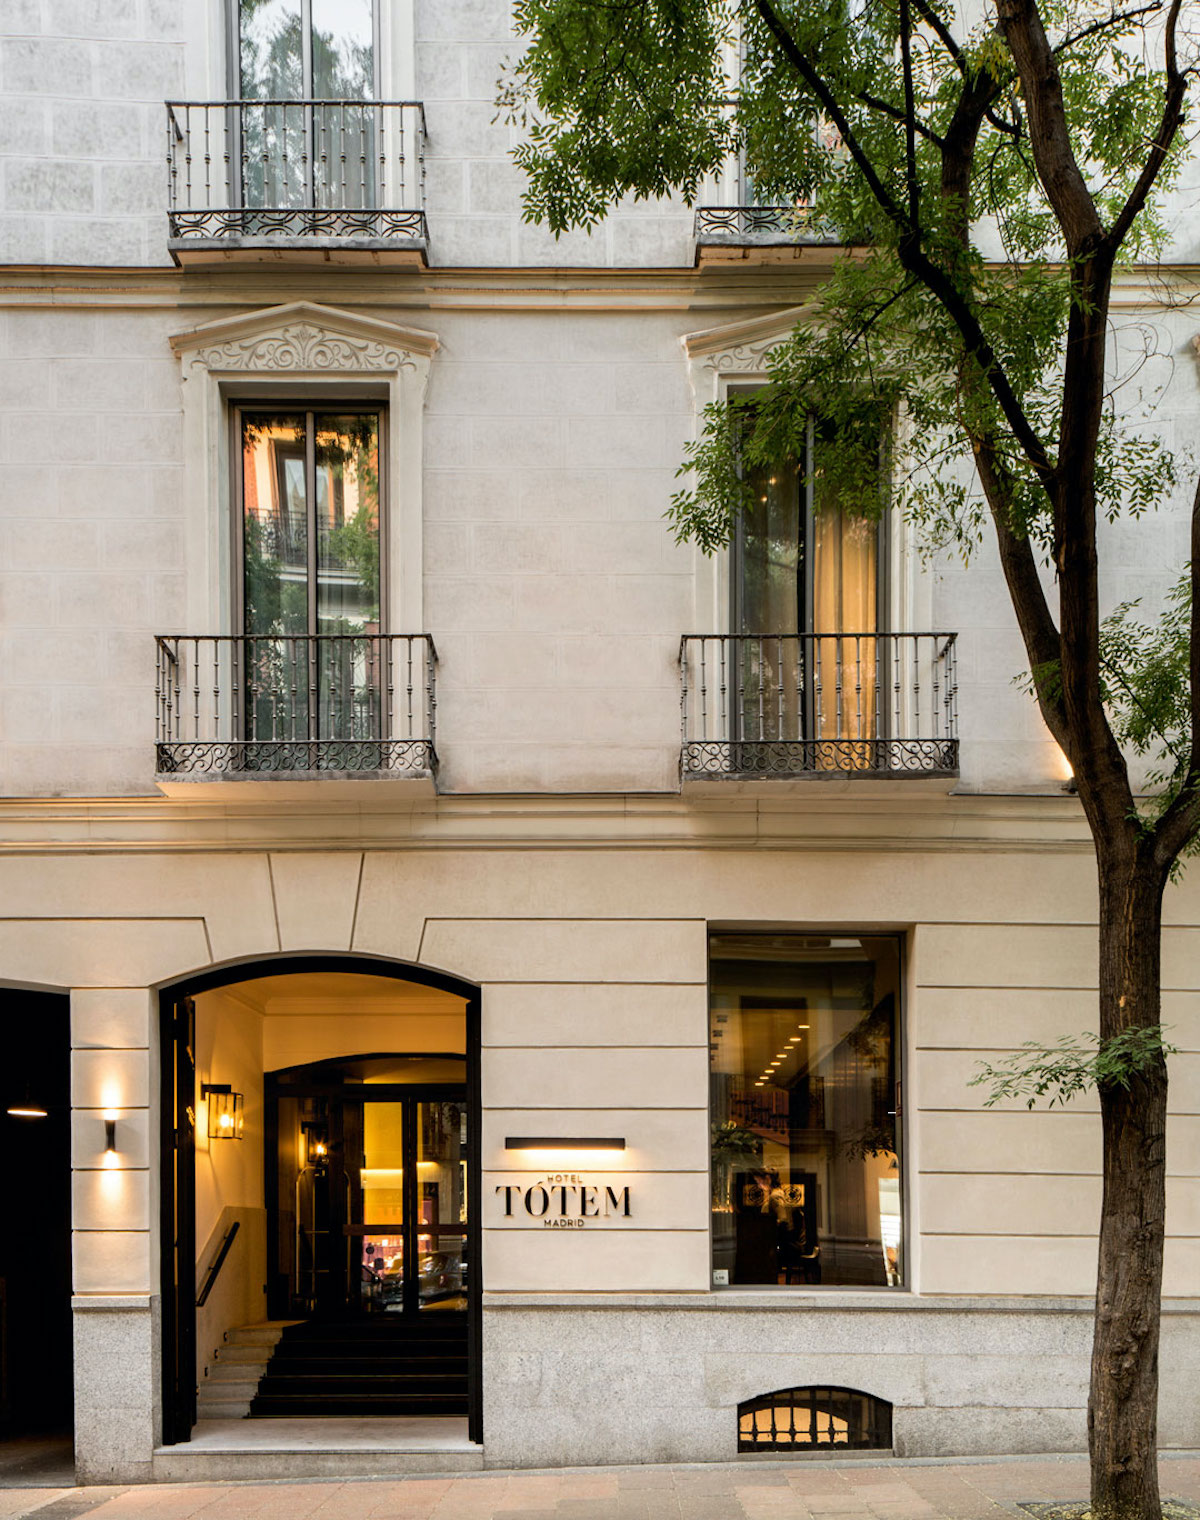 Exterior of the Tótem Hotel in Madrid